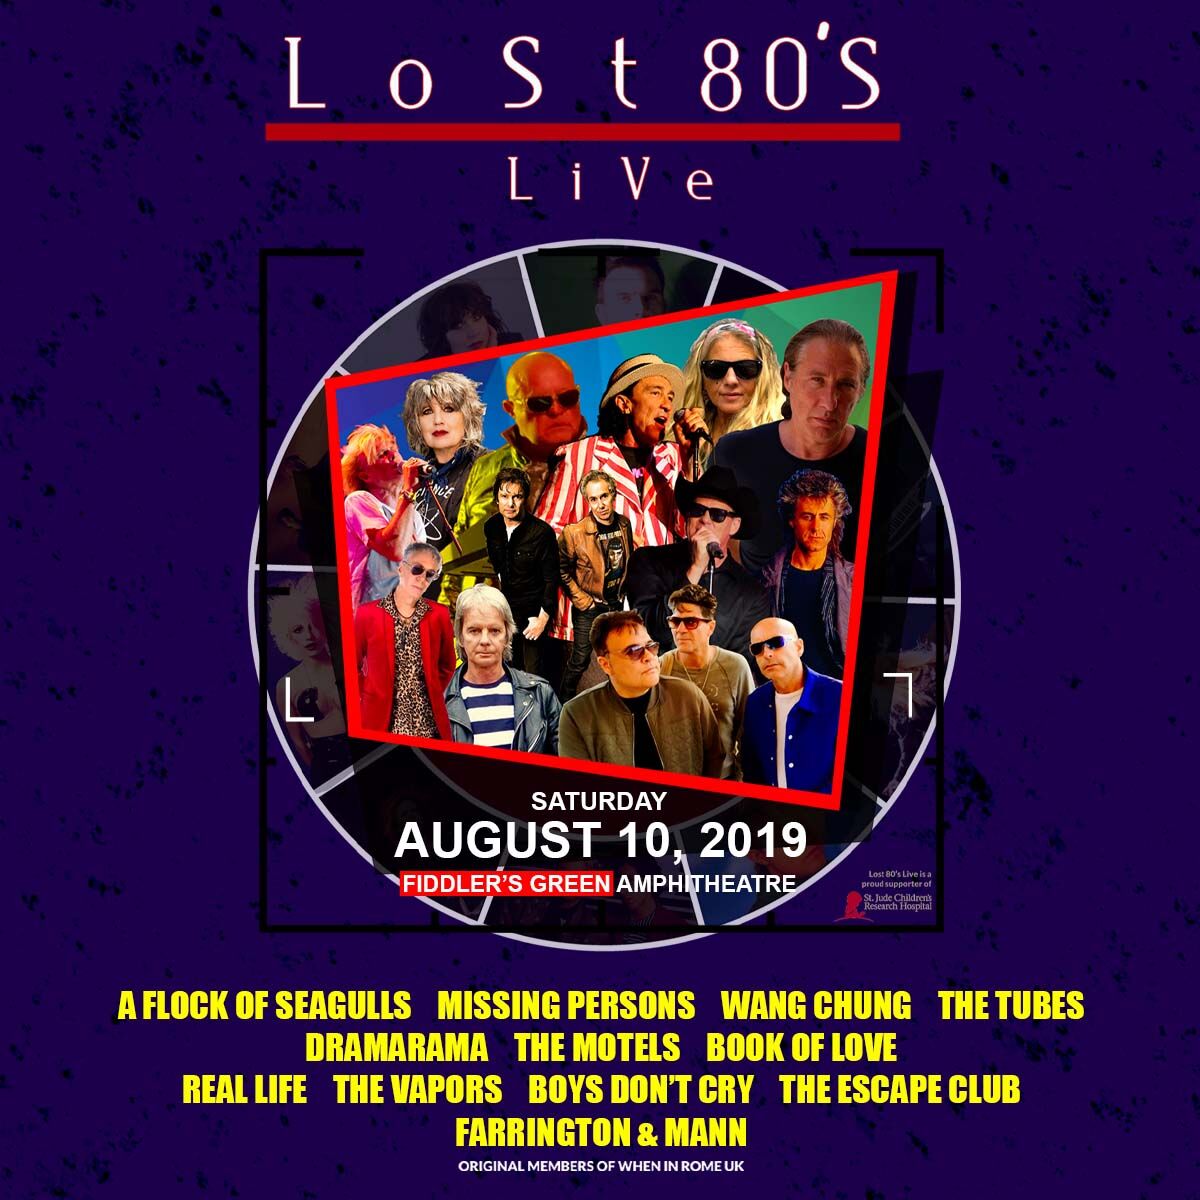 AEG Presents Lost 80's